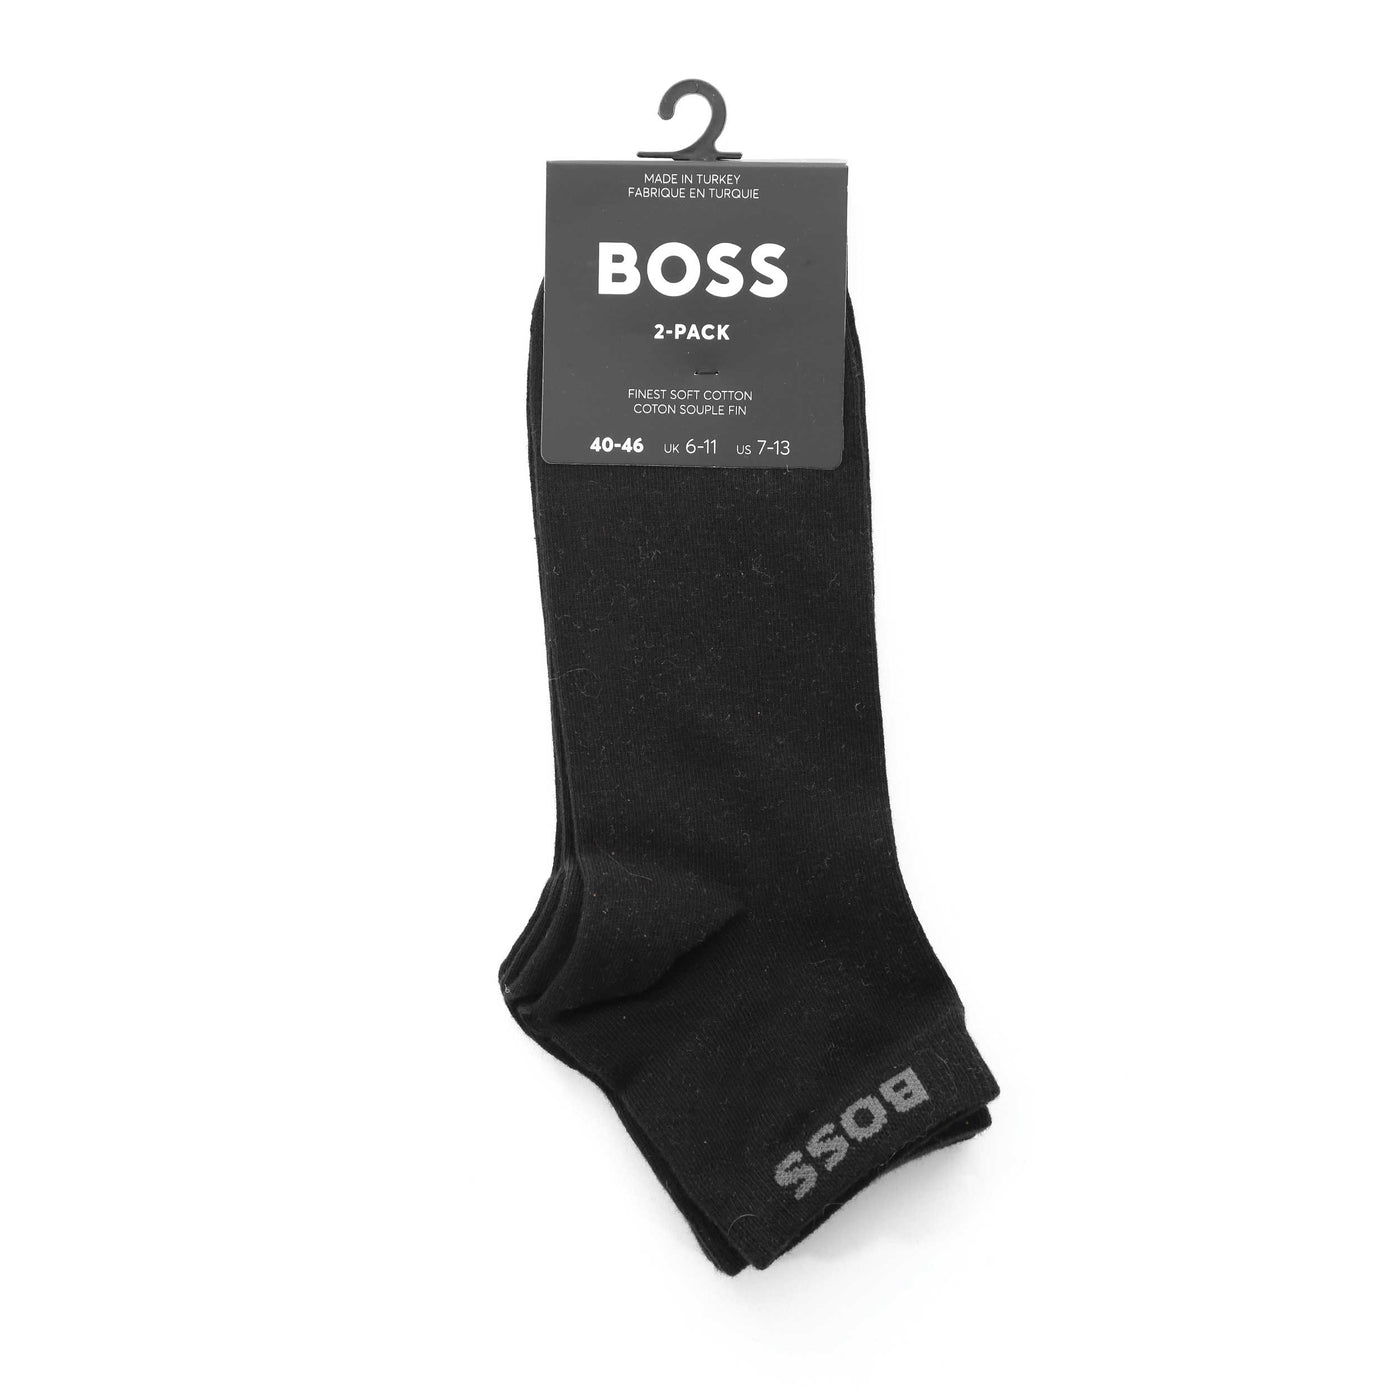 BOSS 2P SH UNI CC Socks in Black